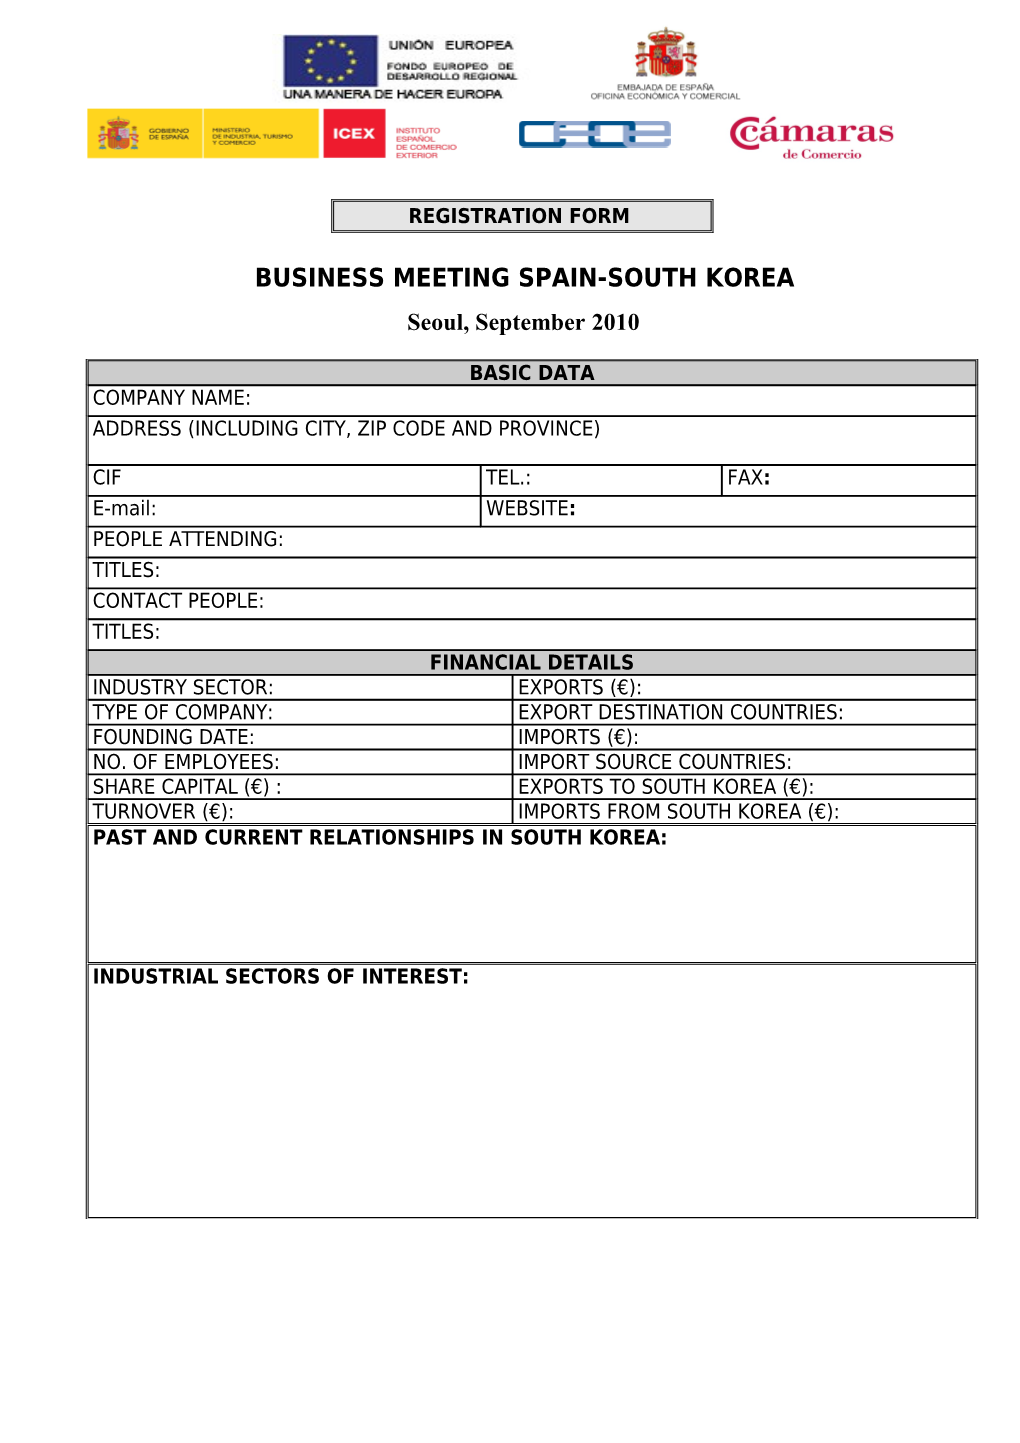 Business Meeting Spain-South Korea